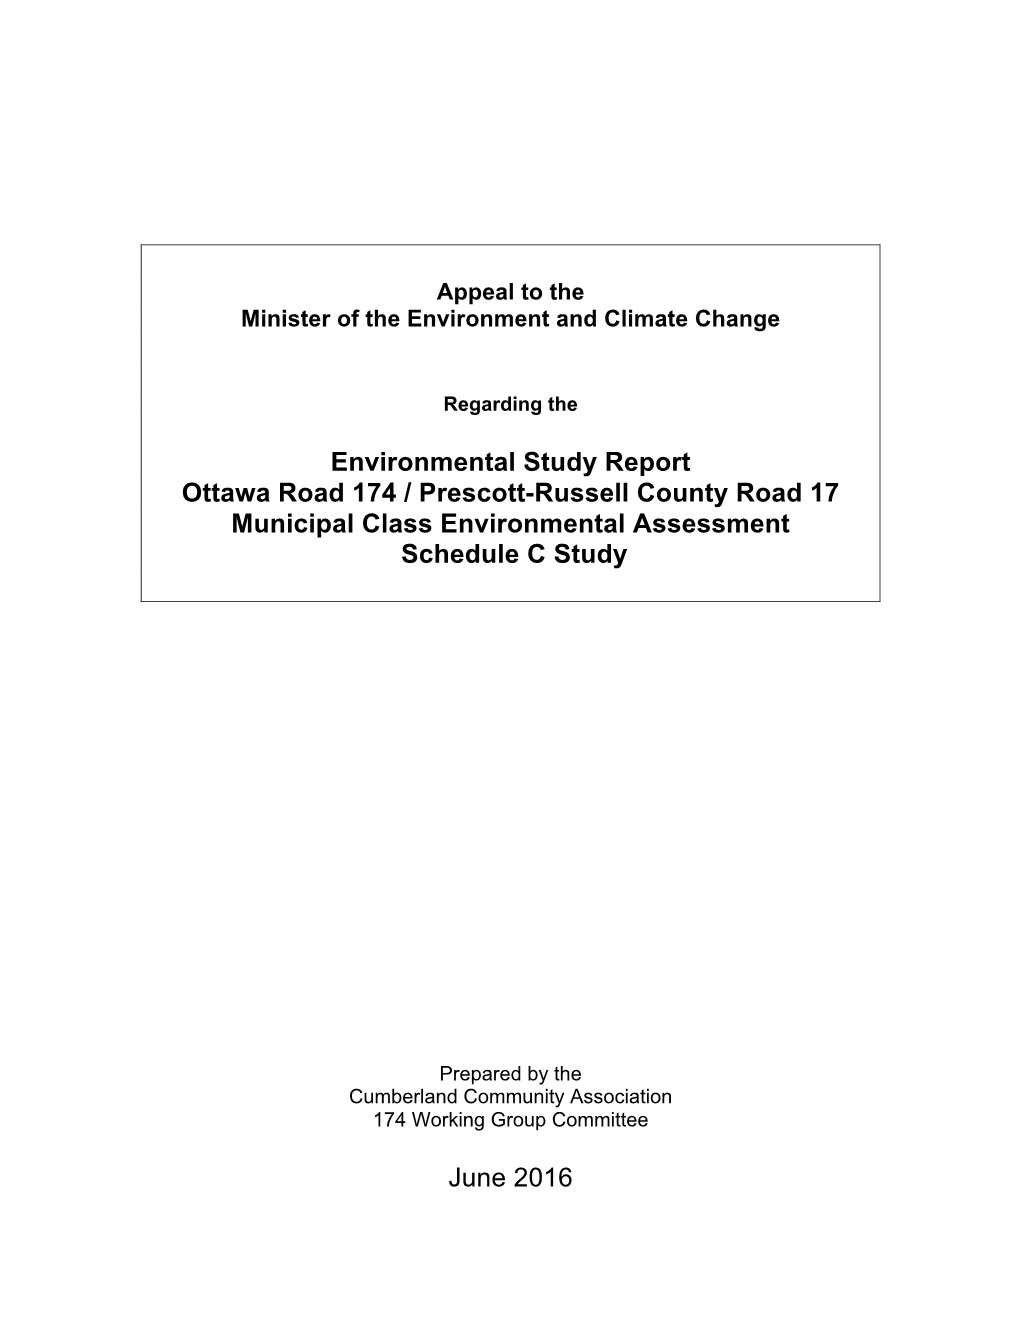 Environmental Study Report Ottawa Road 174 / Prescott-Russell County Road 17 Municipal Class Environmental Assessment Schedule C Study